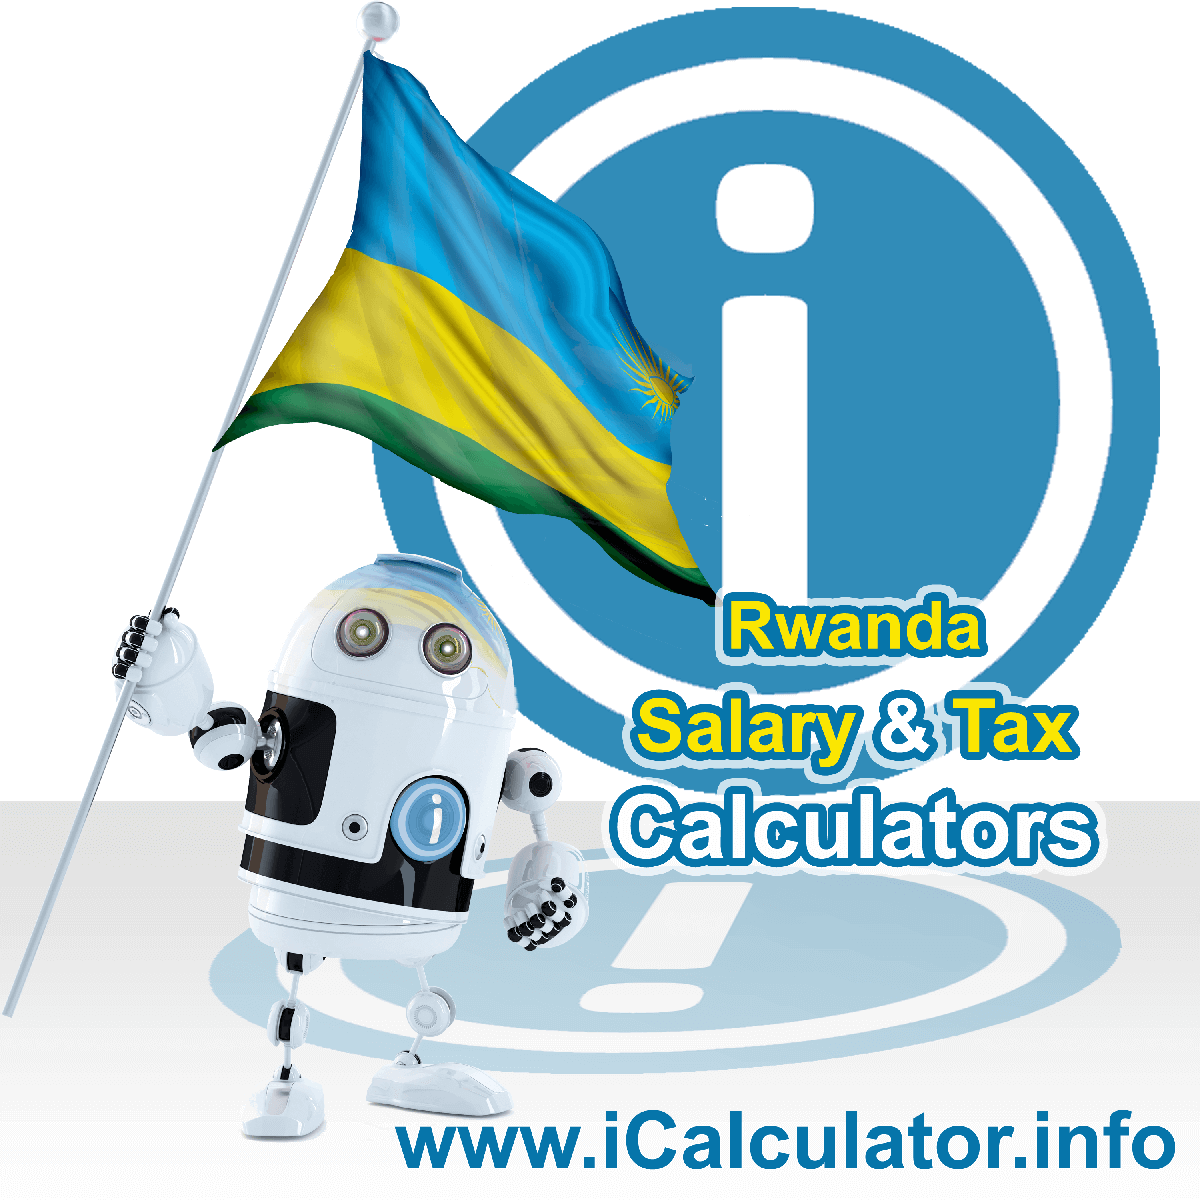 Rwanda Tax Calculator. This image shows the Rwanda flag and information relating to the tax formula for the Rwanda Salary Calculator